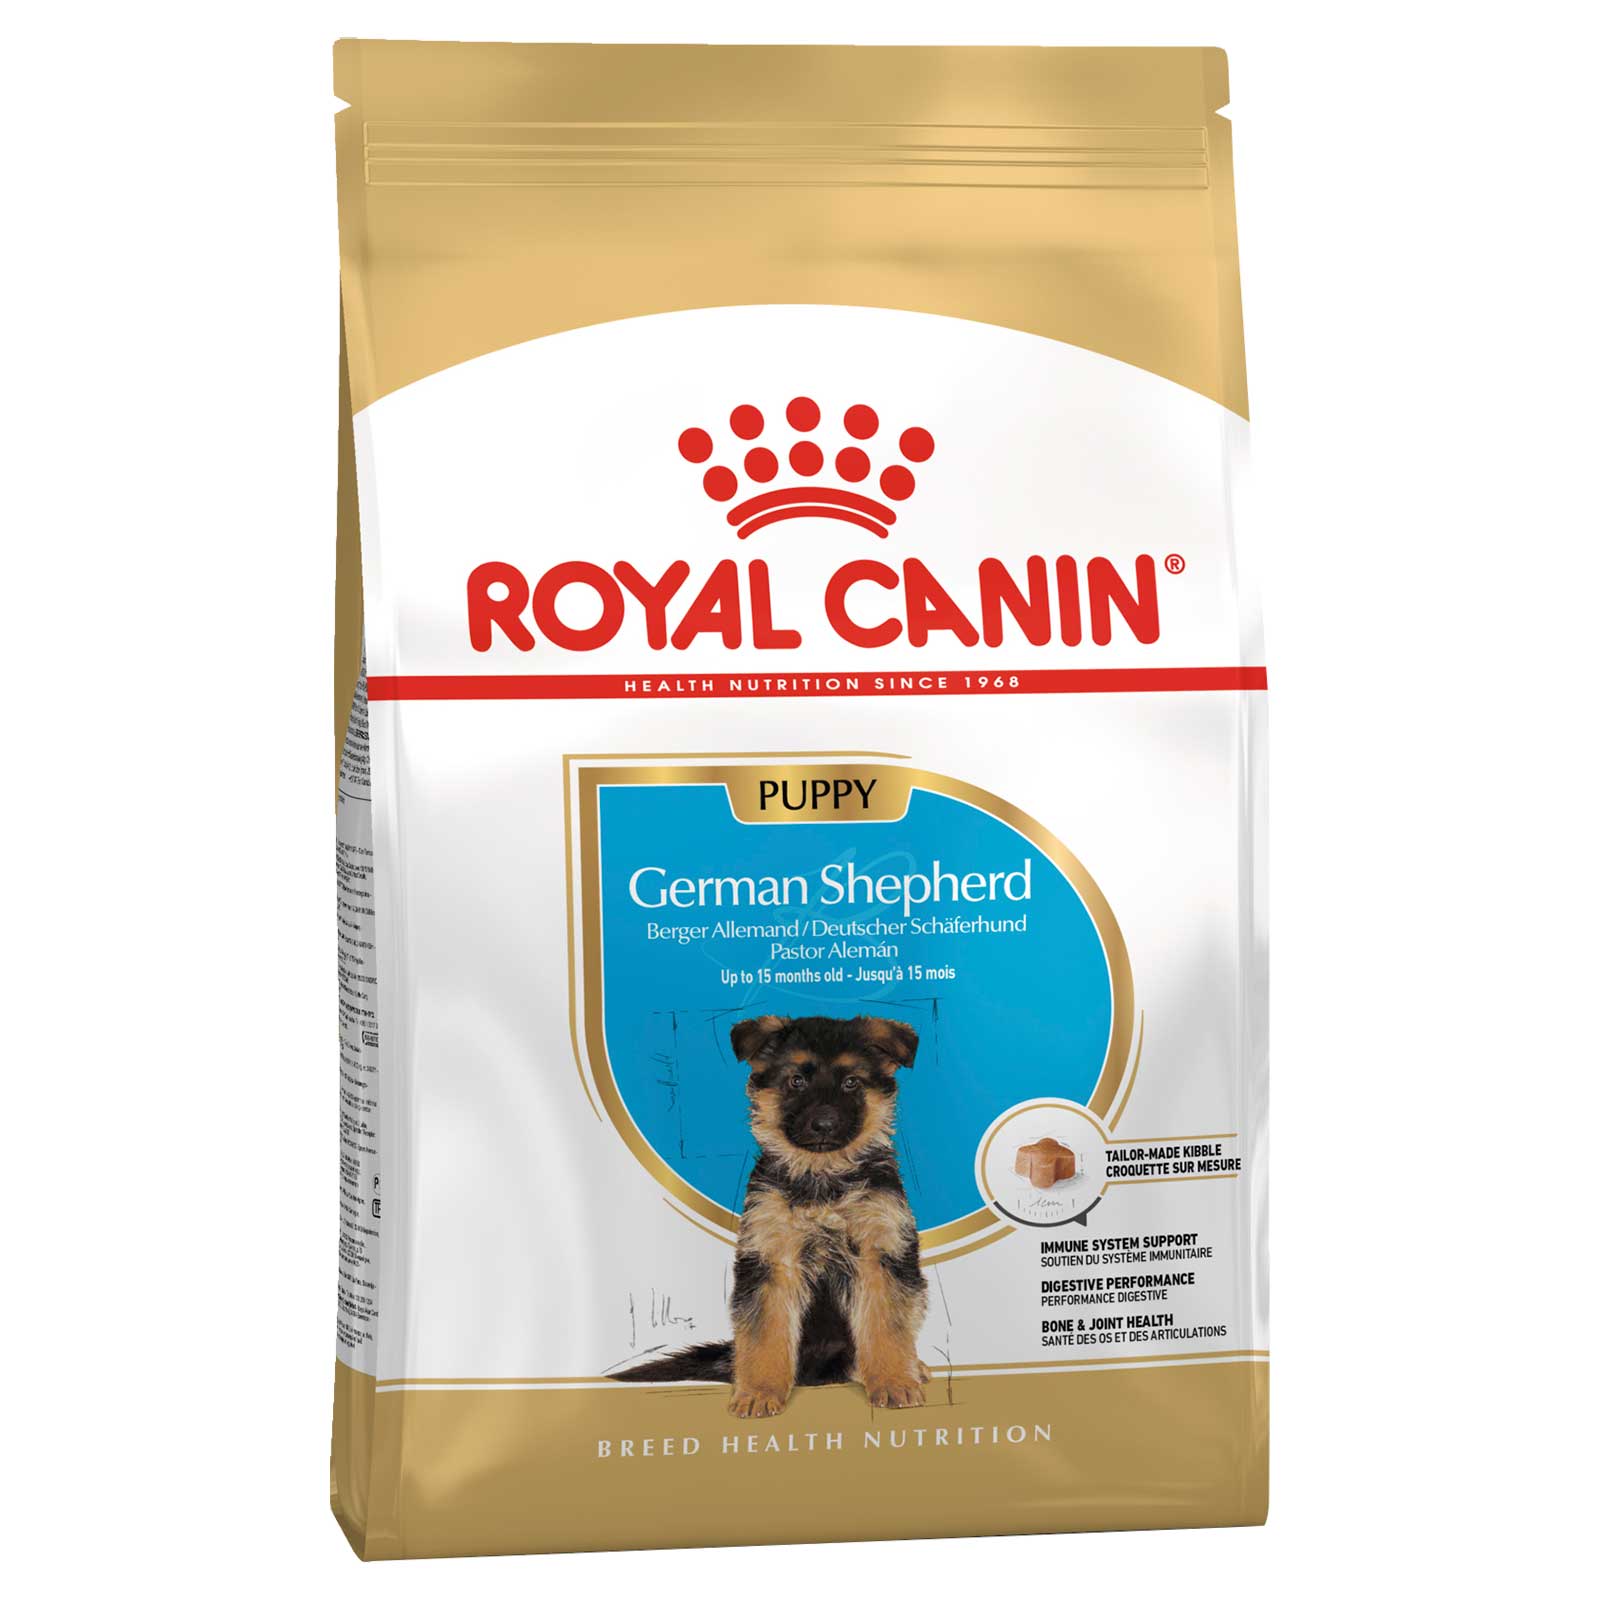 Royal Canin Dog Food Puppy German Shepherd